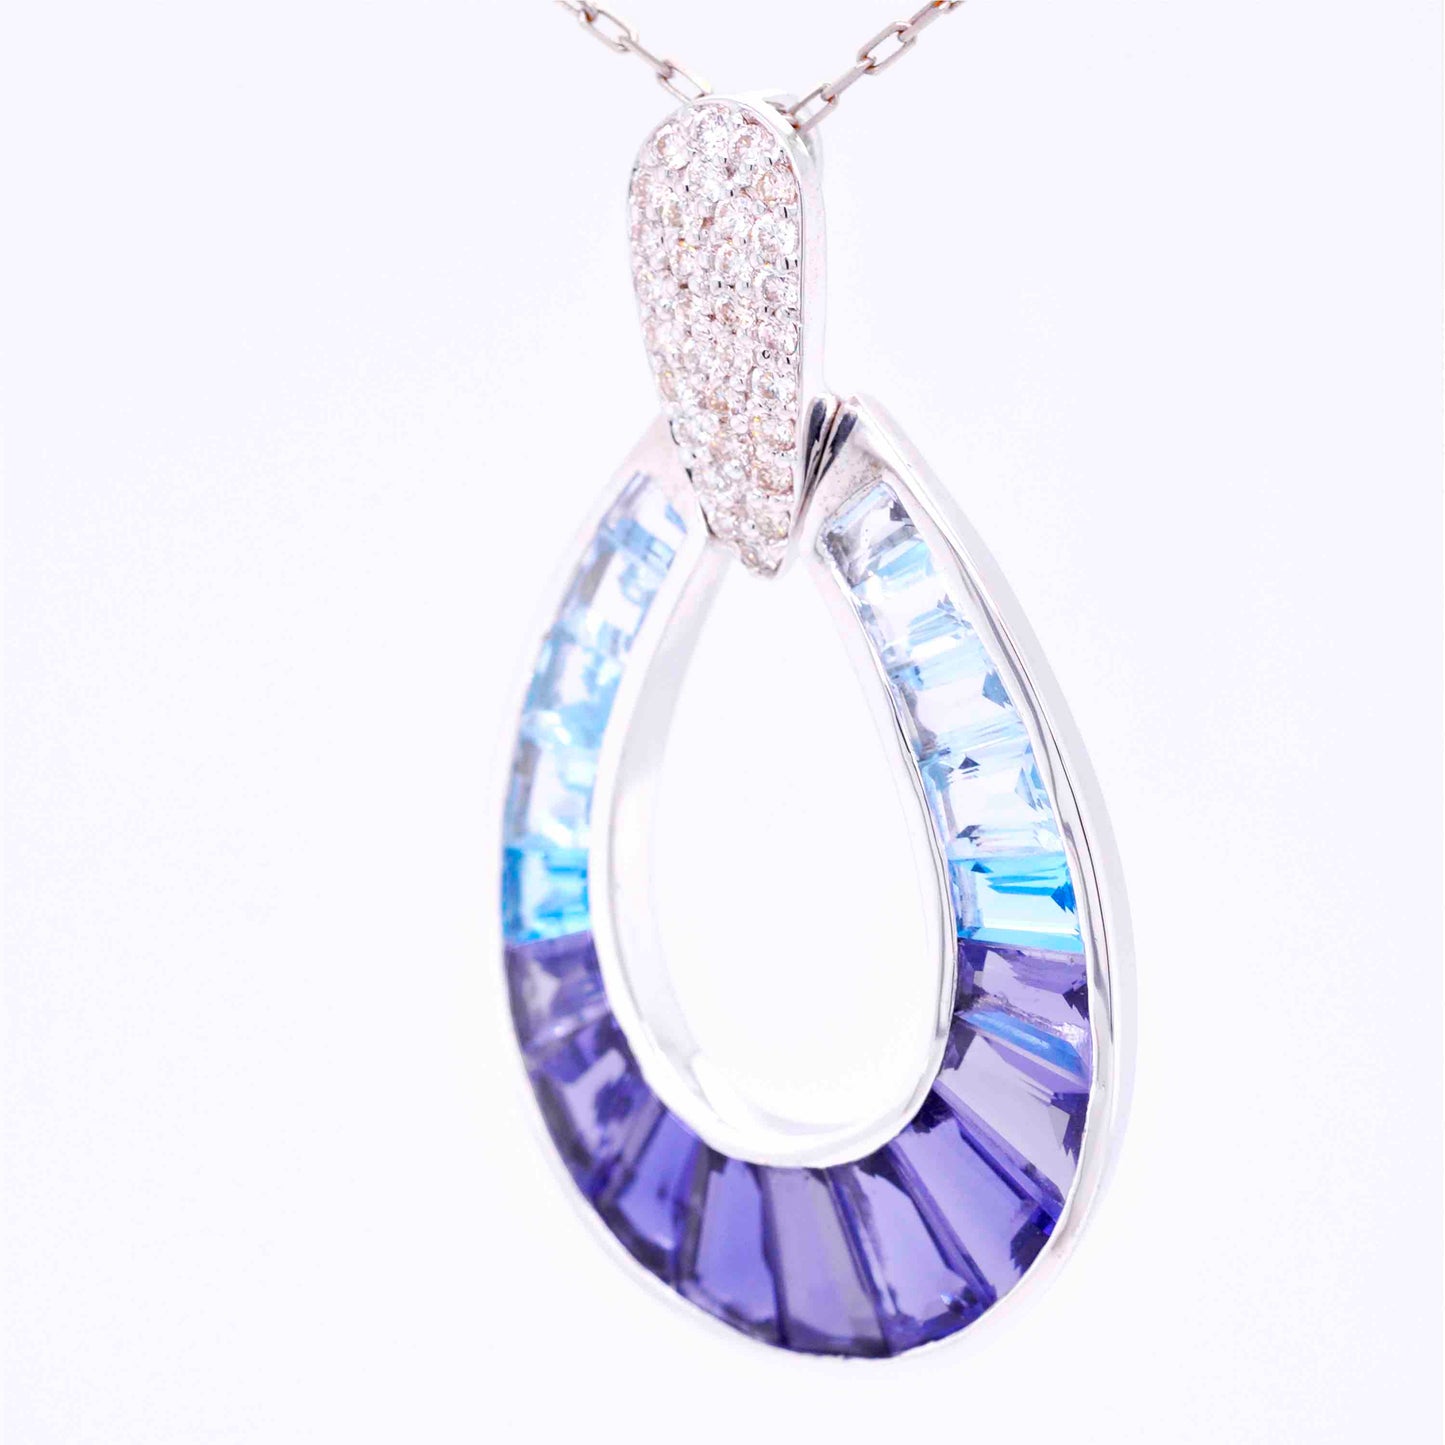 silver Aqua raindrop pendant necklace with diamond